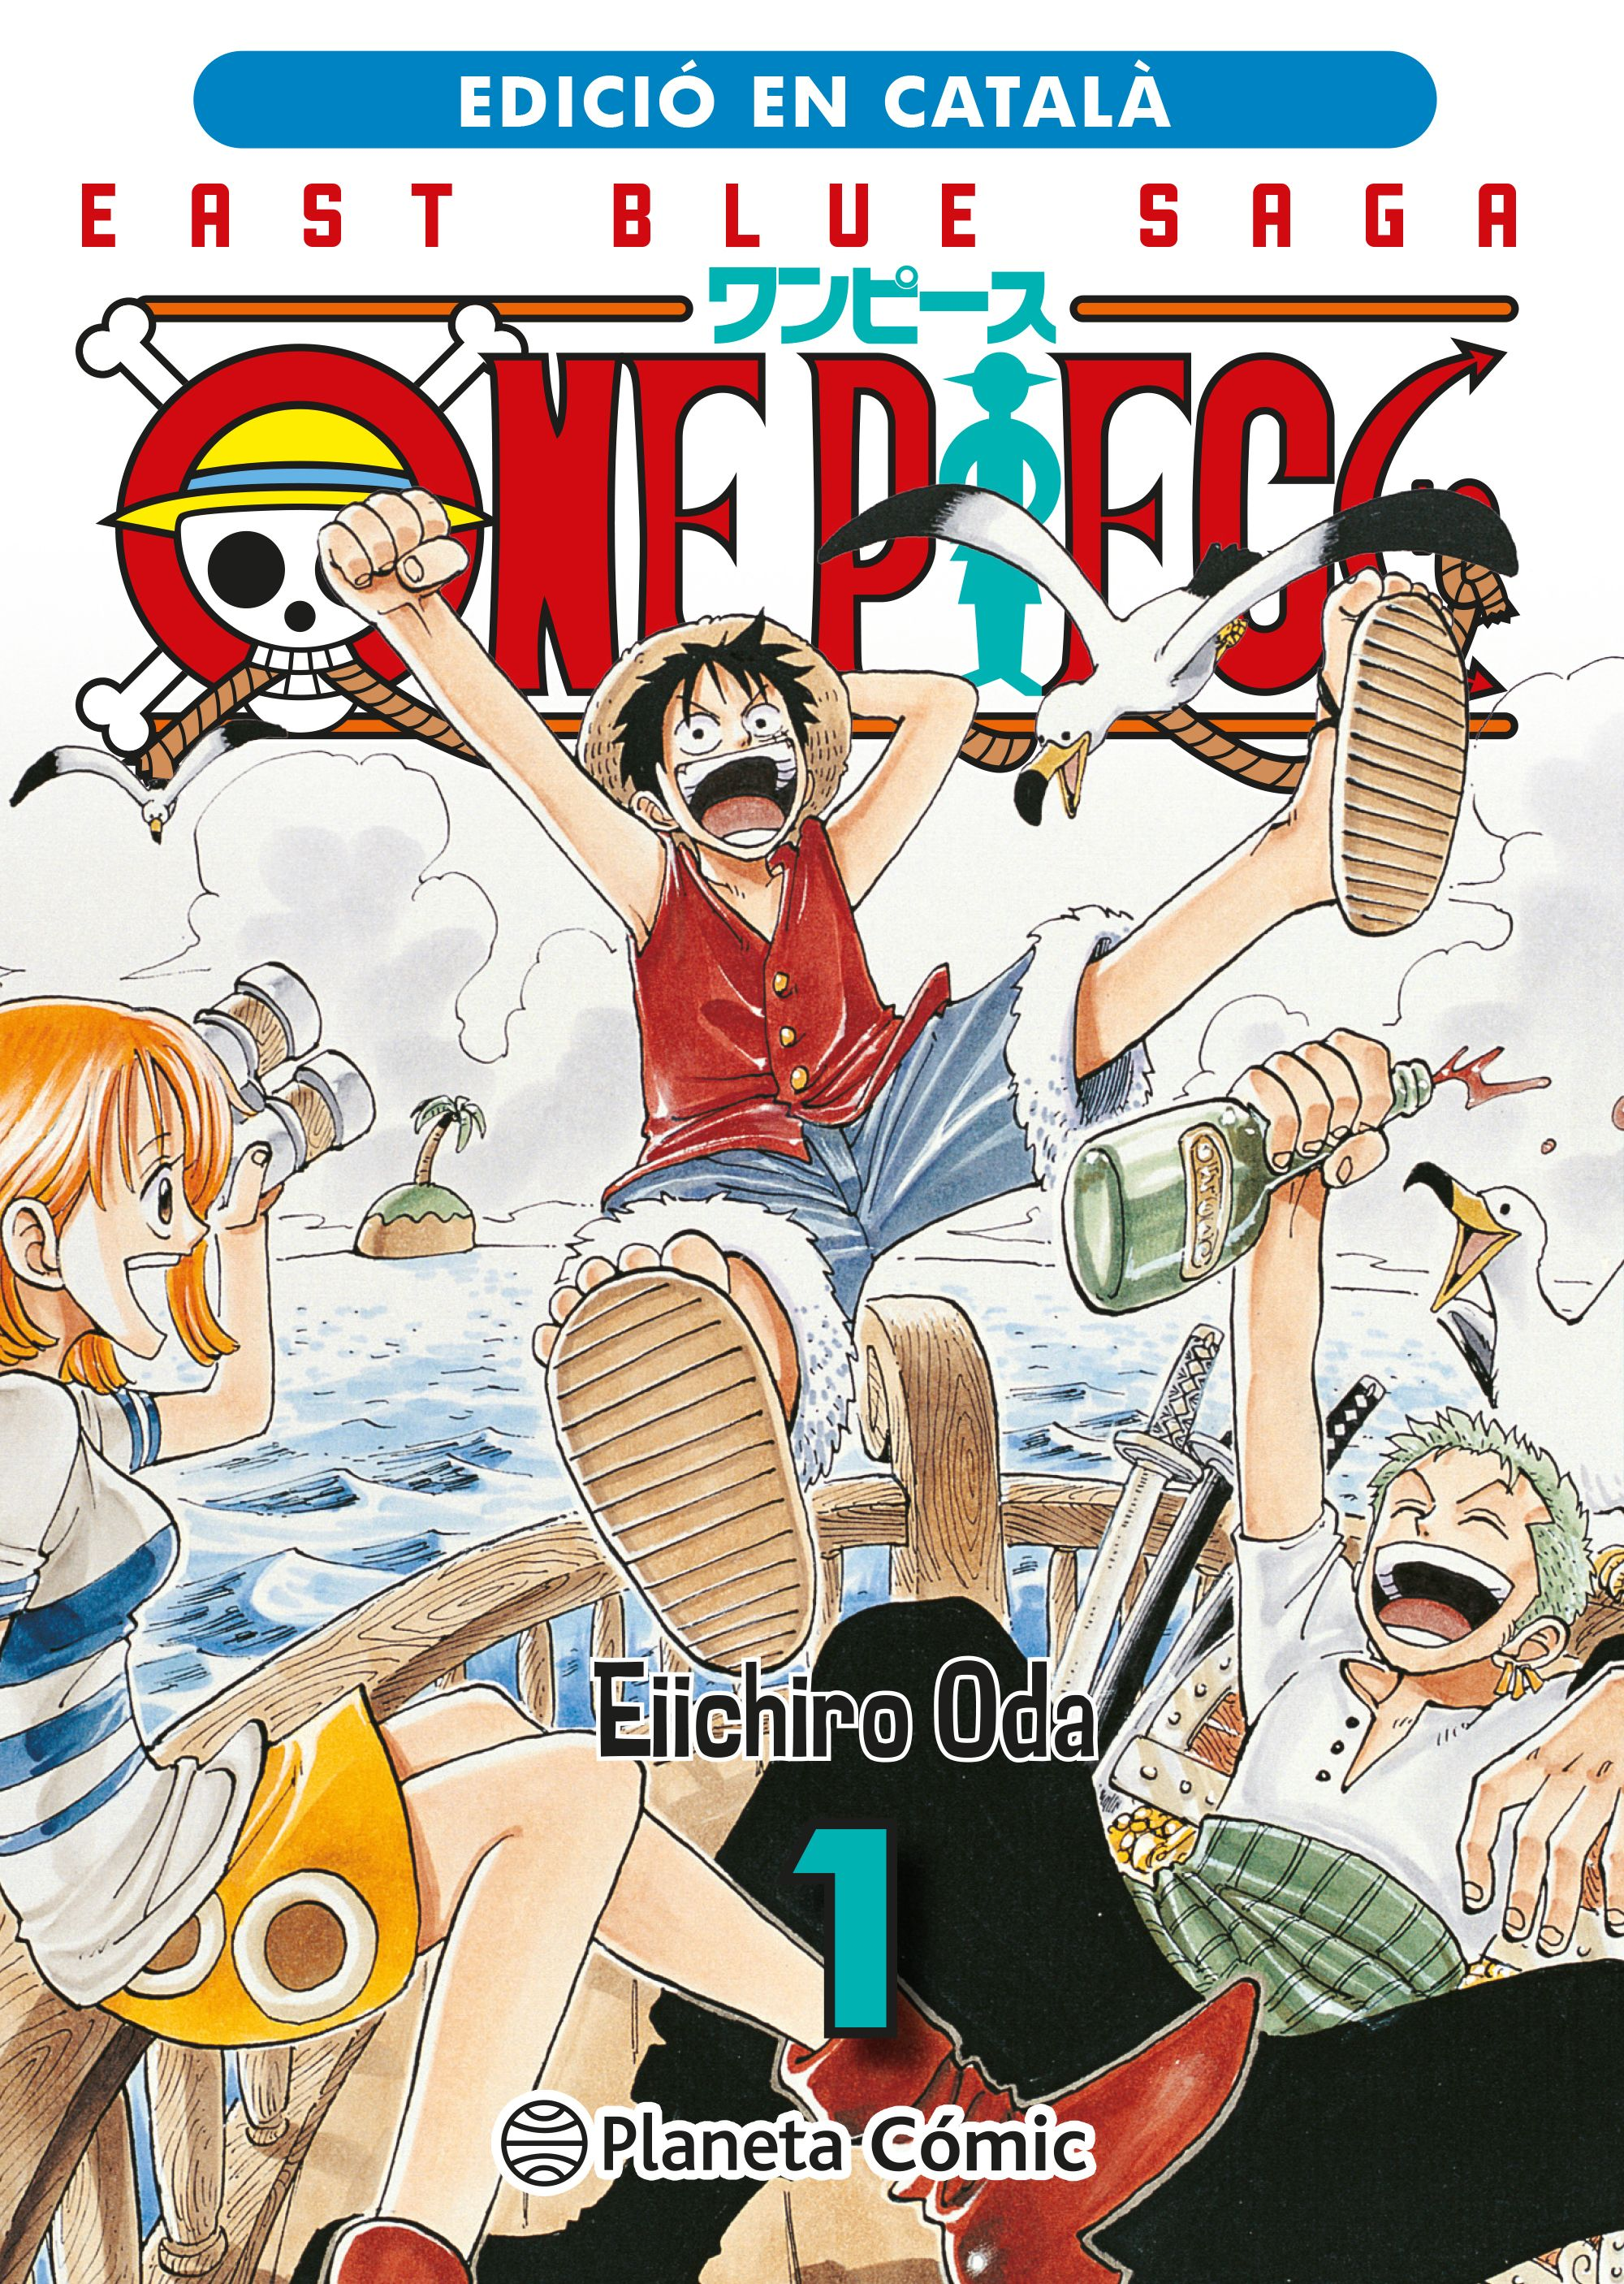 Categoria:Openings, One Piece Català Wiki